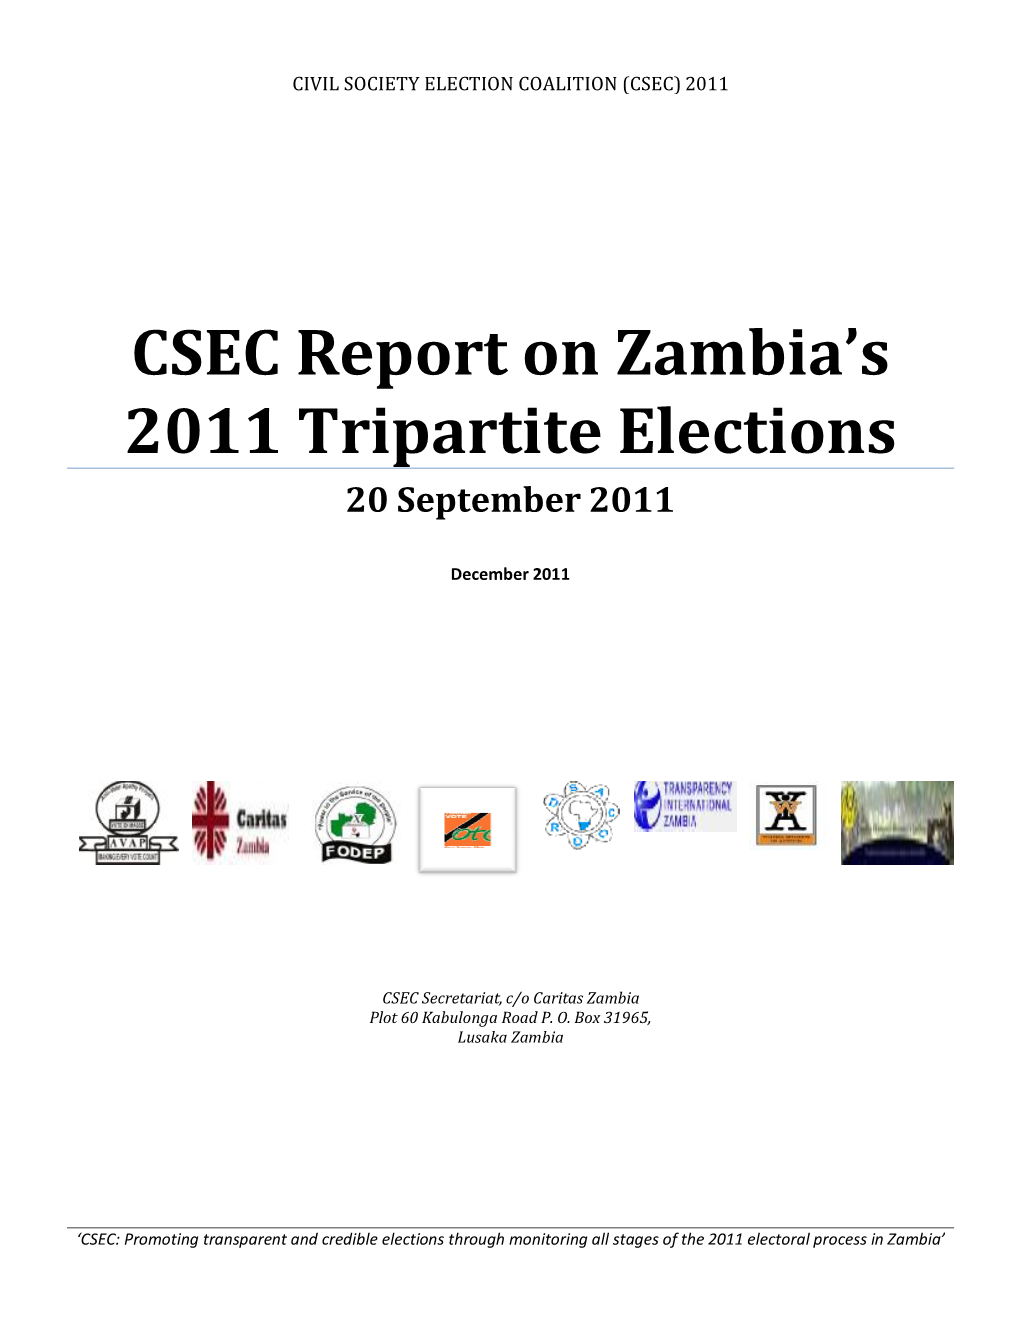 CSEC Report on Zambia's 2011 Tripartite Elections